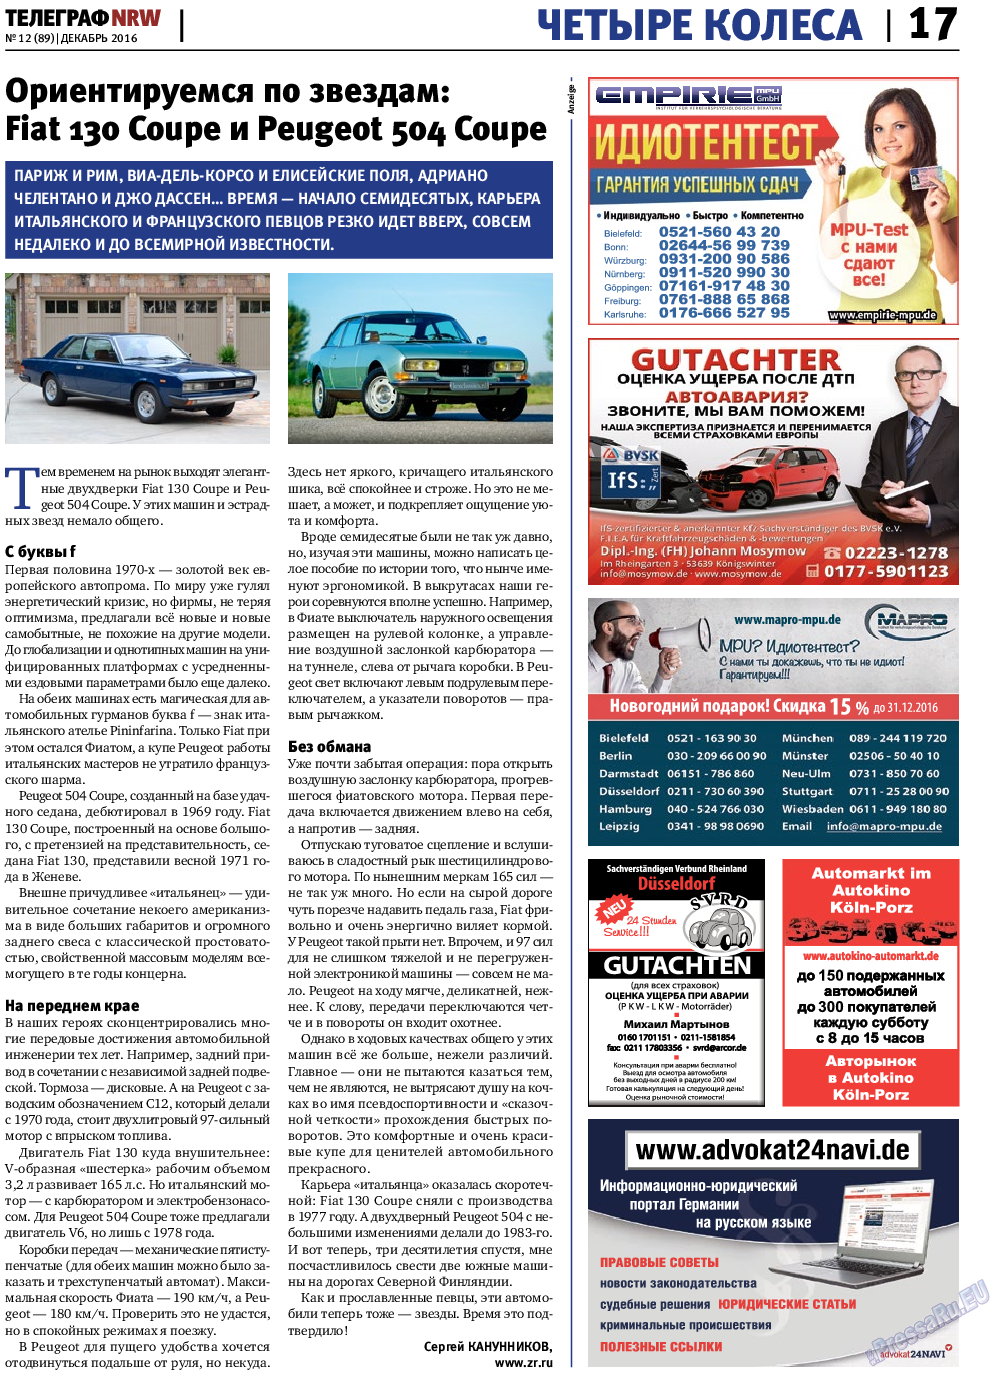 Телеграф NRW, газета. 2016 №12 стр.17